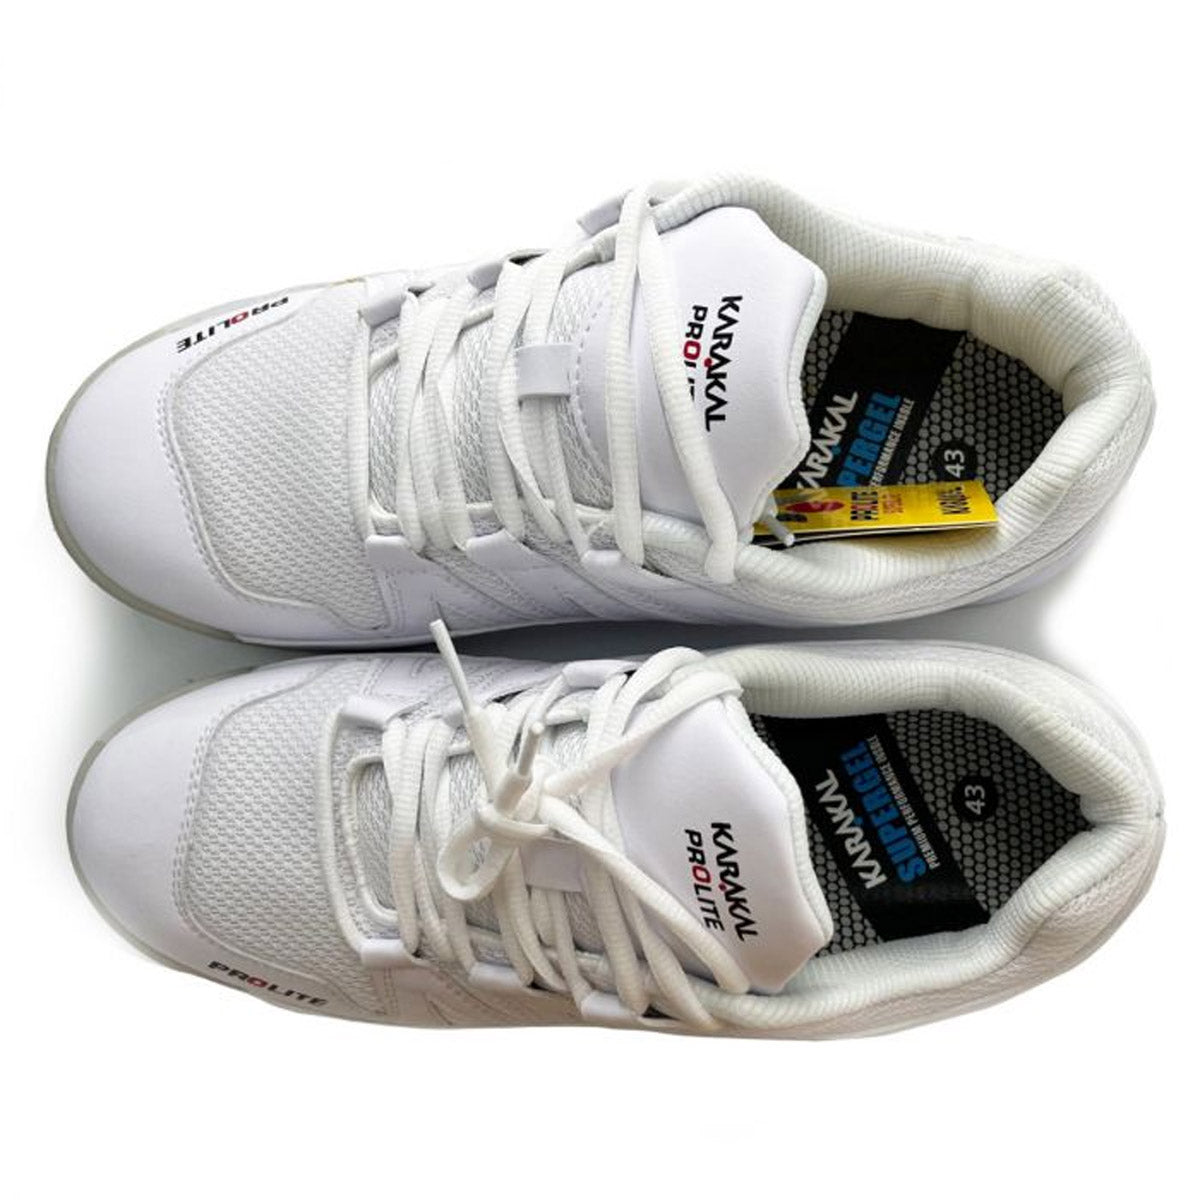 Karakal KF Pro Lite Badminton Shoes - White - Top